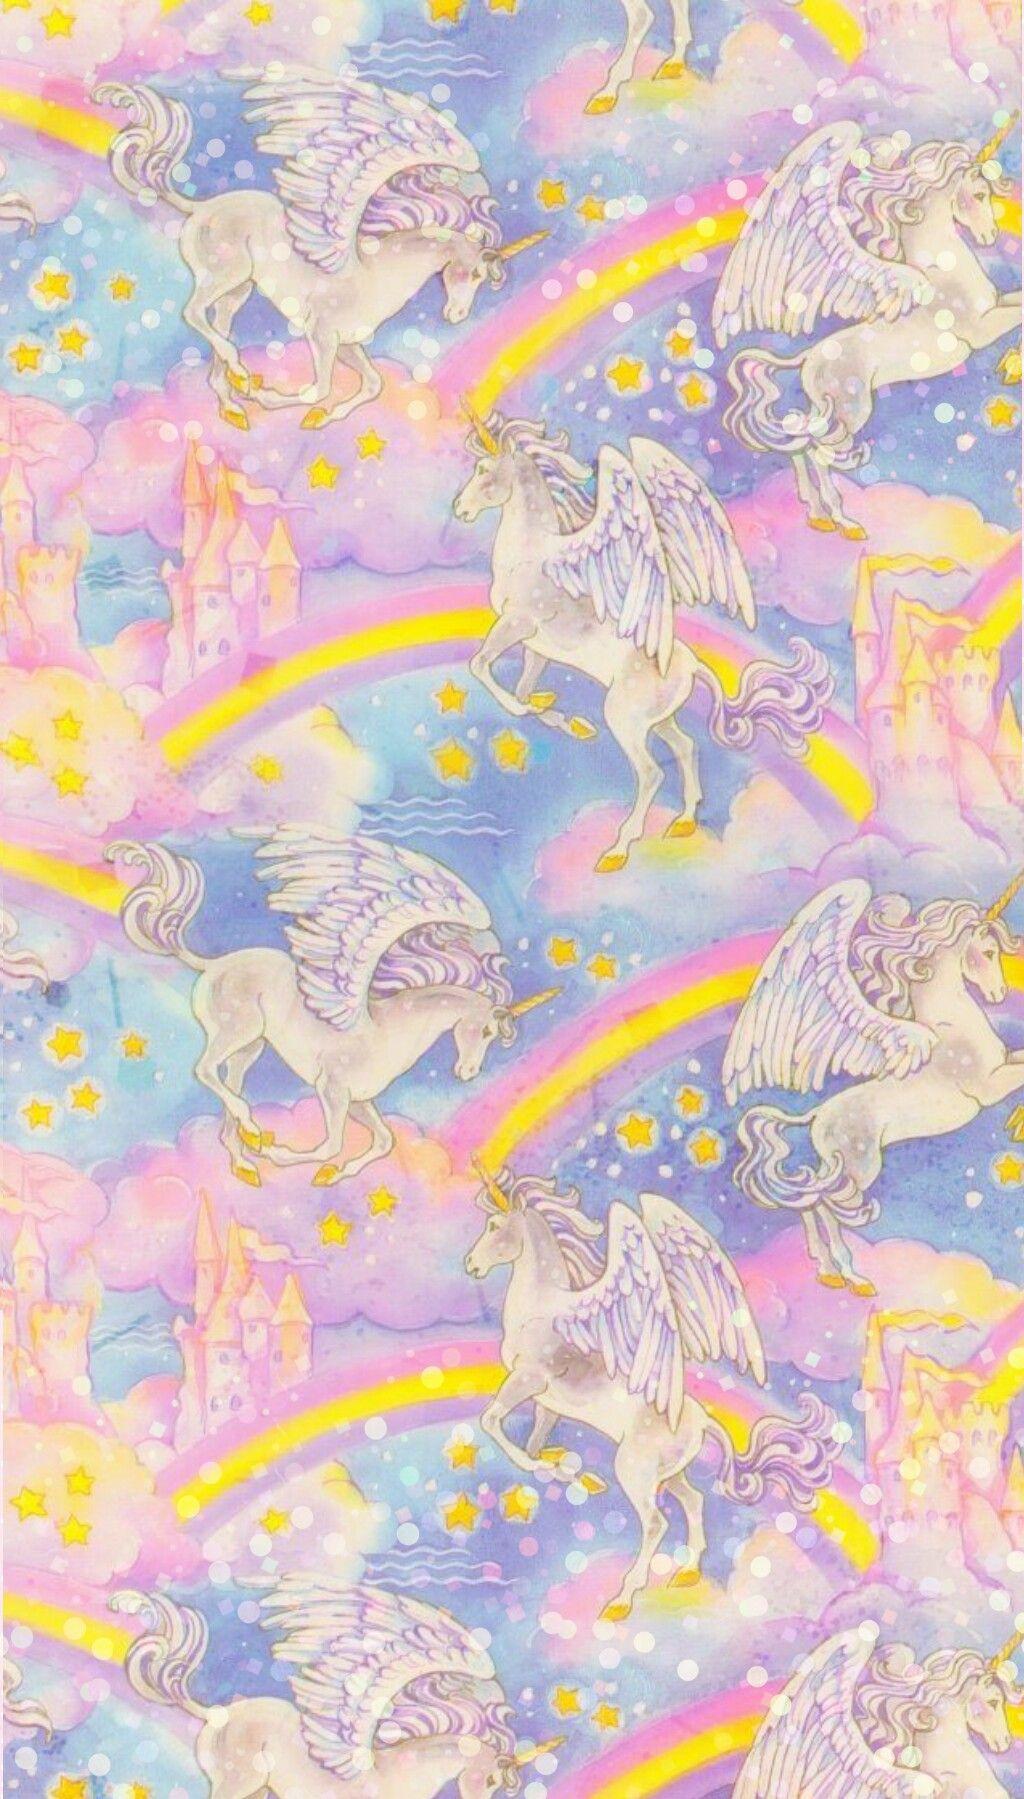 Pastel Unicorn Wallpapers - Top Free Pastel Unicorn ...